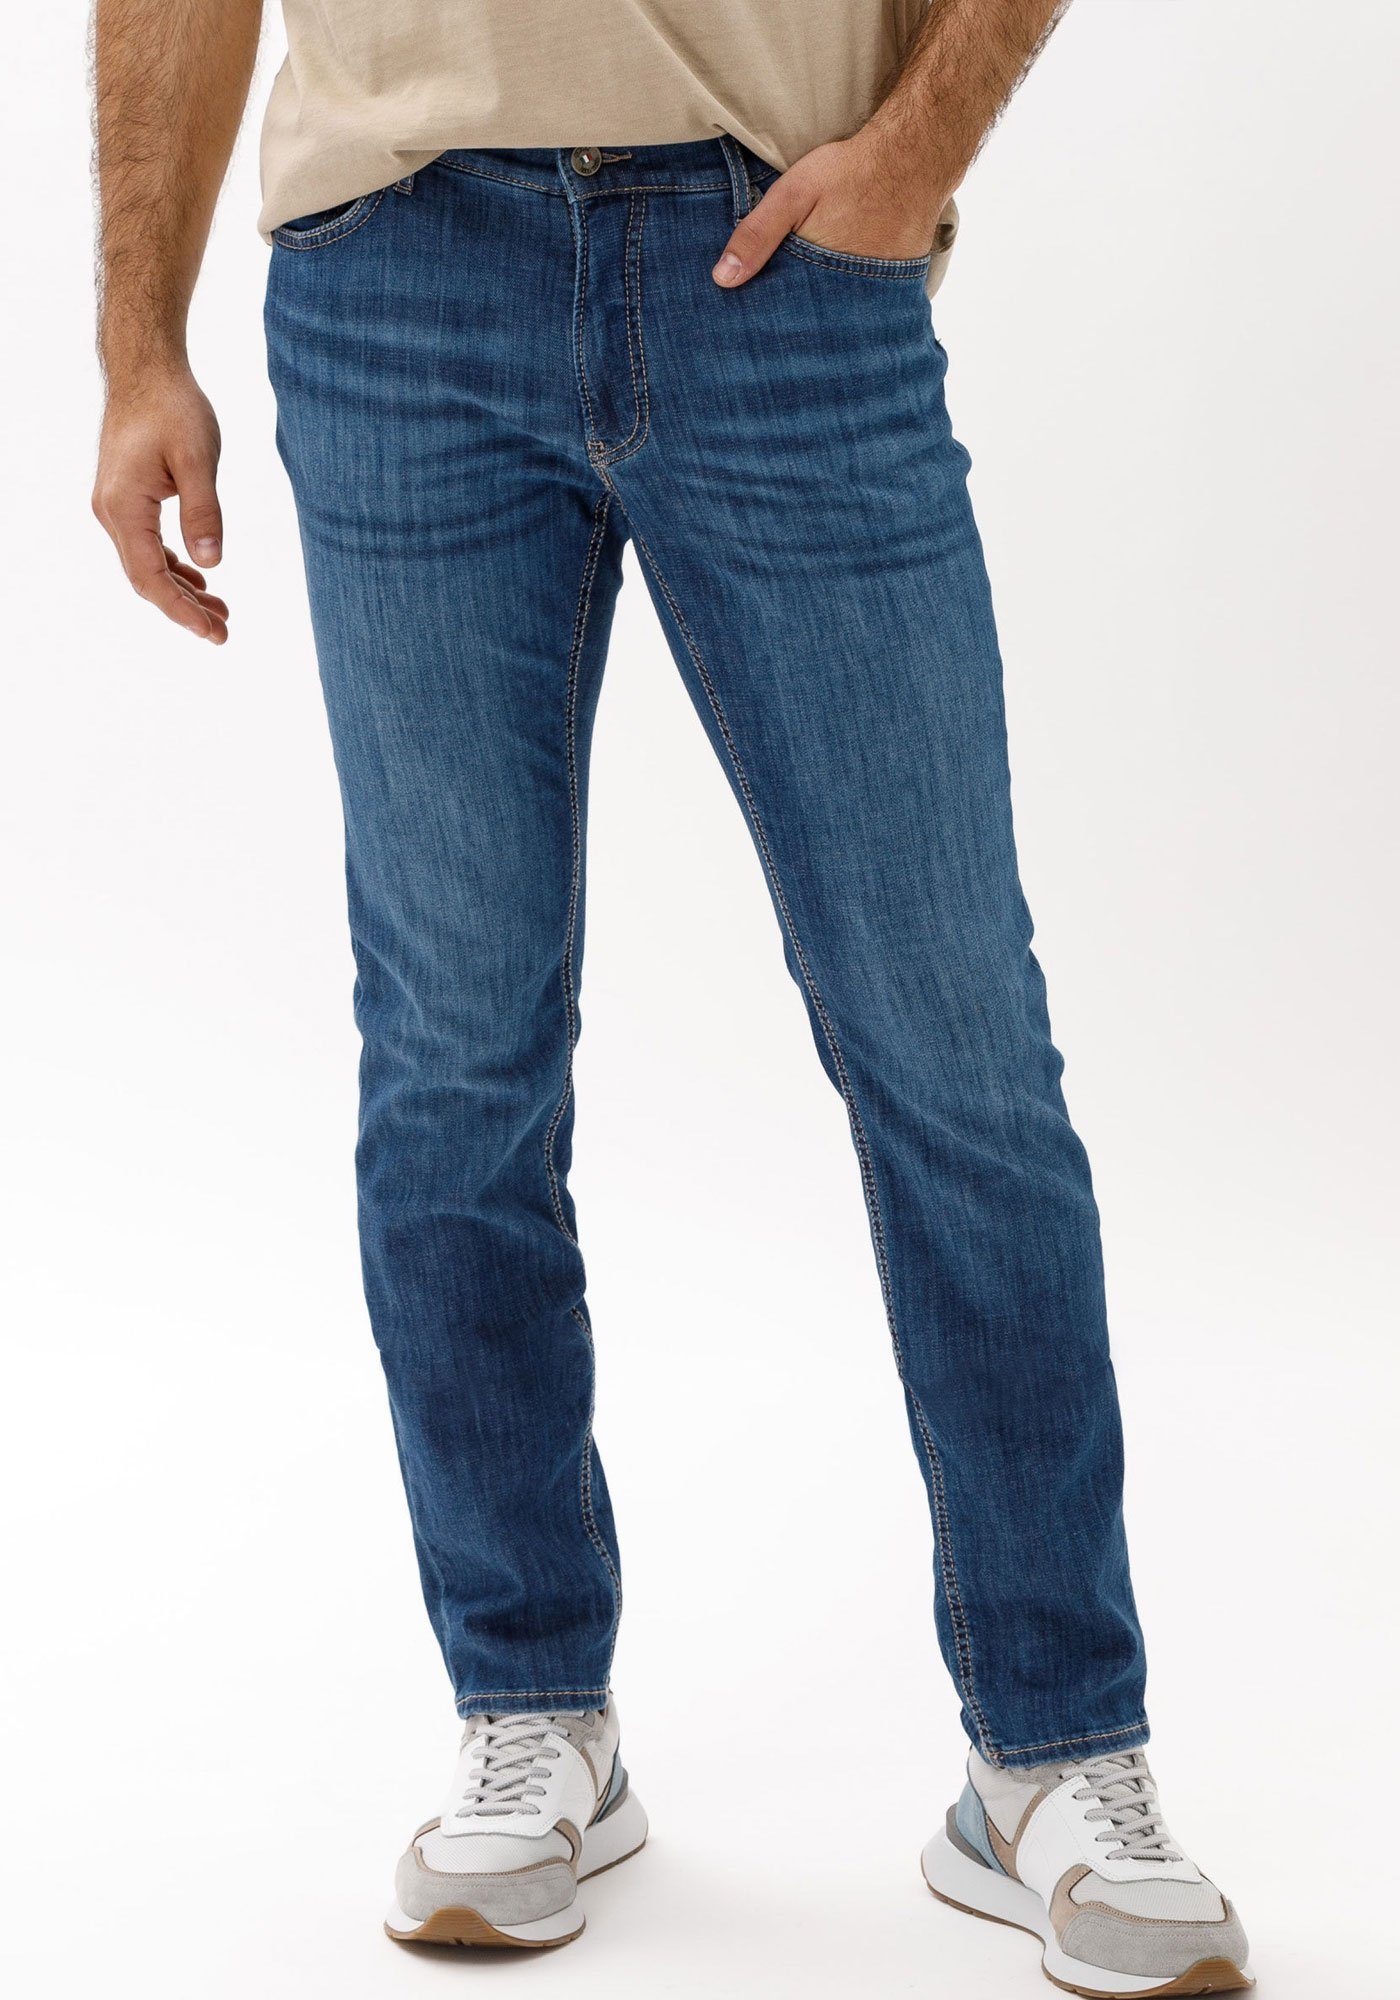 softer Hi-Flex LIGHT, Brax CHUCK used 5-Pocket-Jeans Style Sommerdenim blue mid